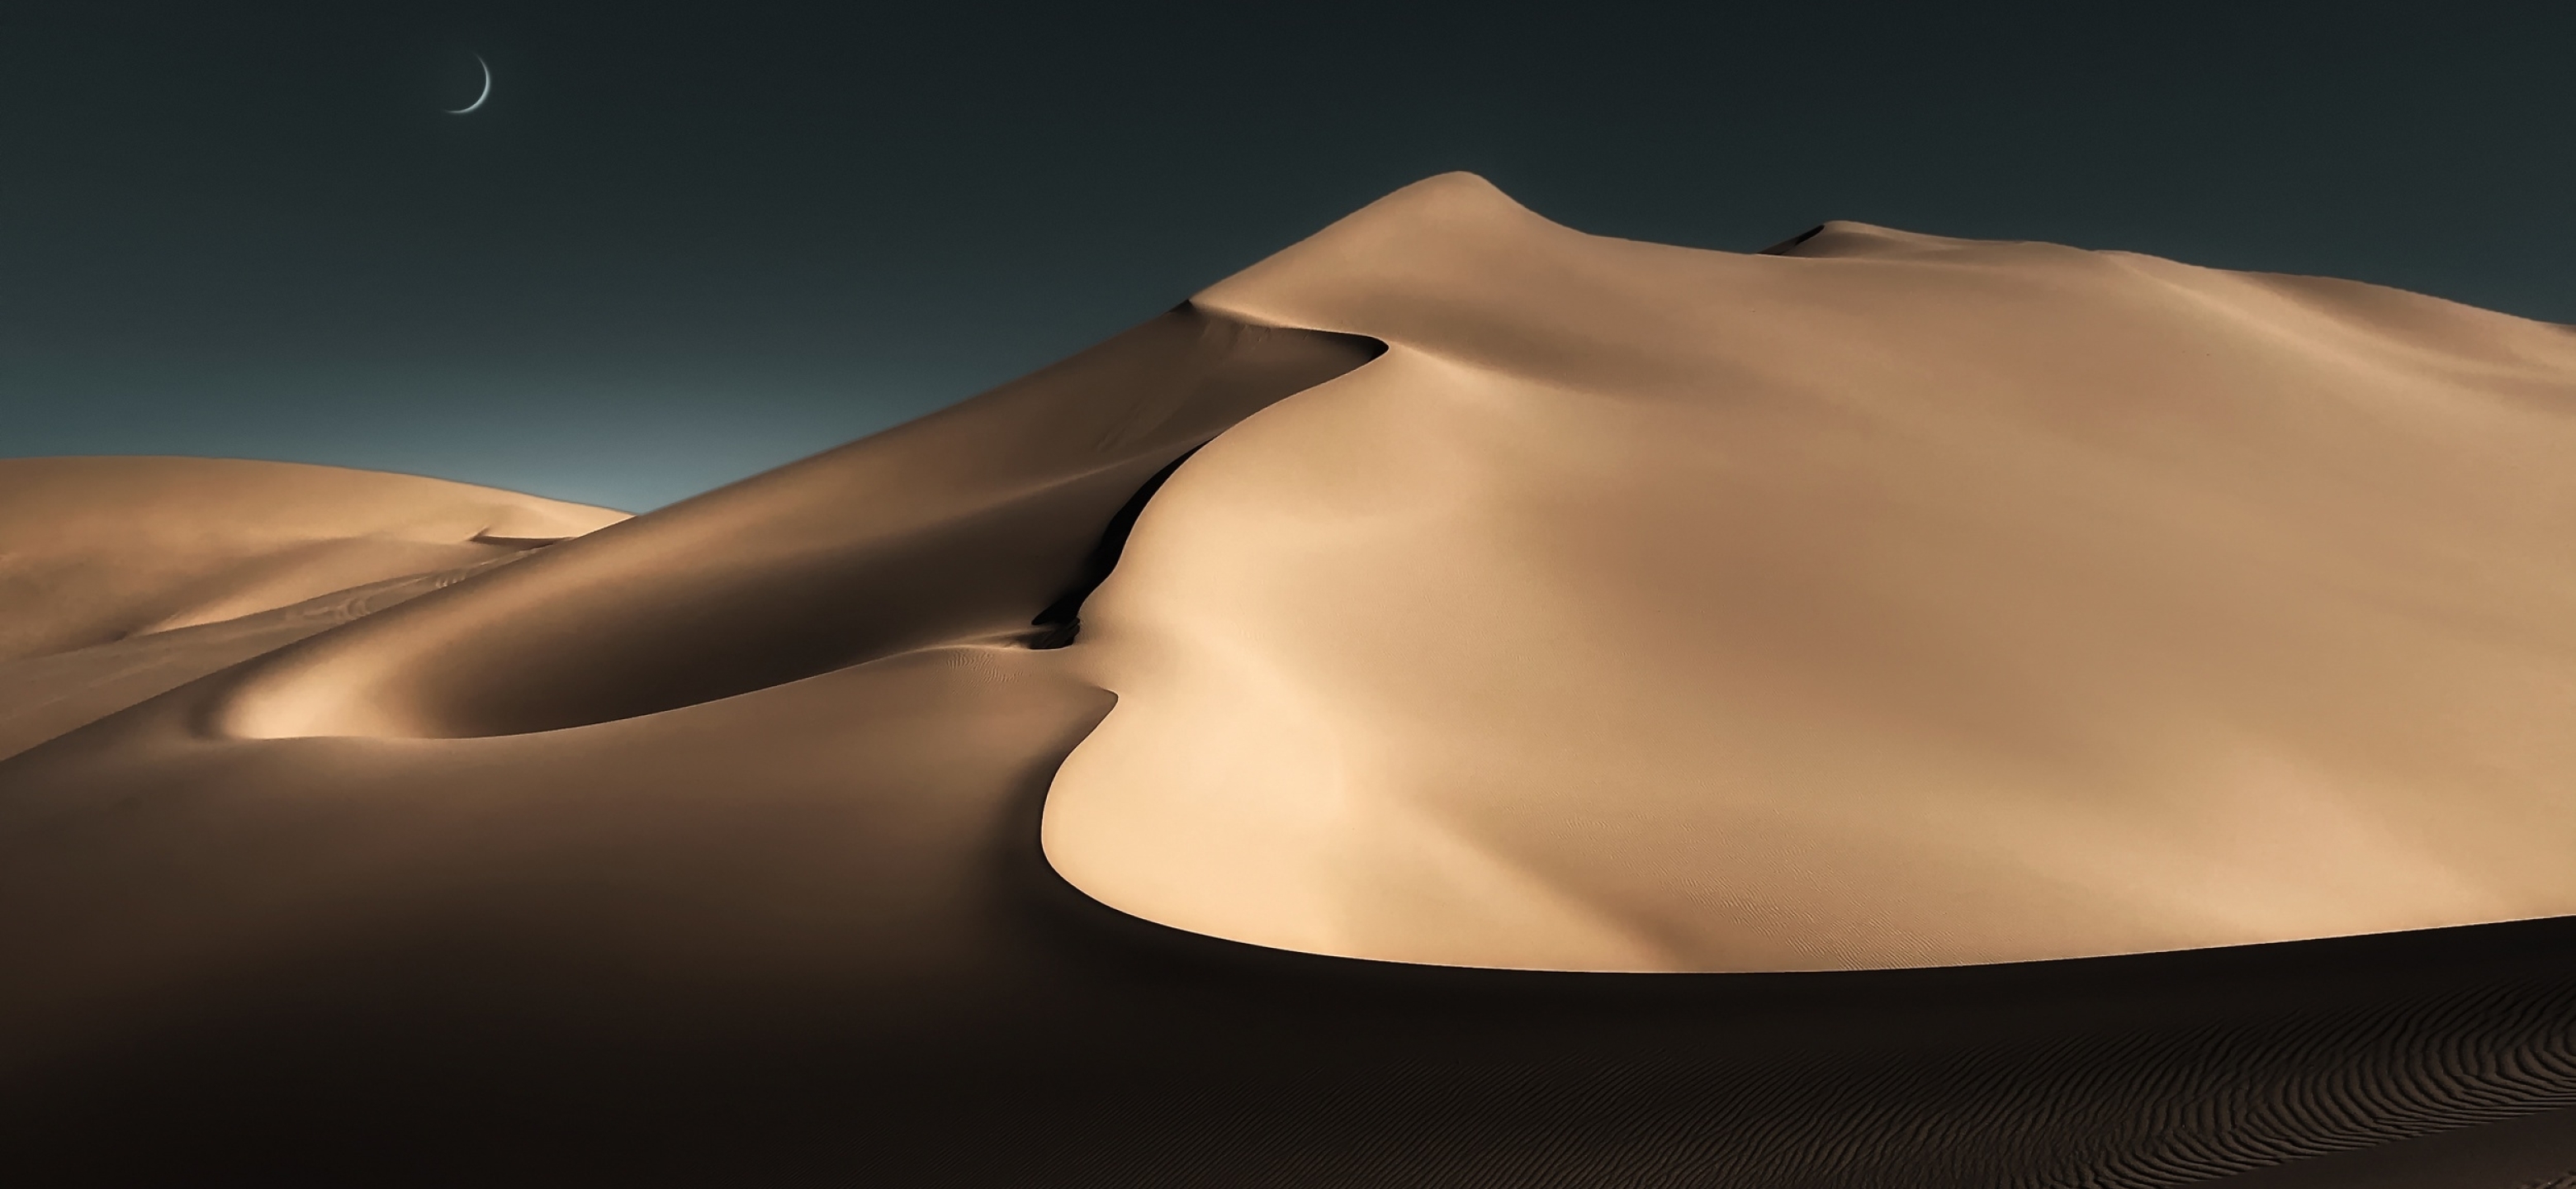 3120x1440 Desert Dune at Night 3120x1440 Resolution Wallpaper, HD ...